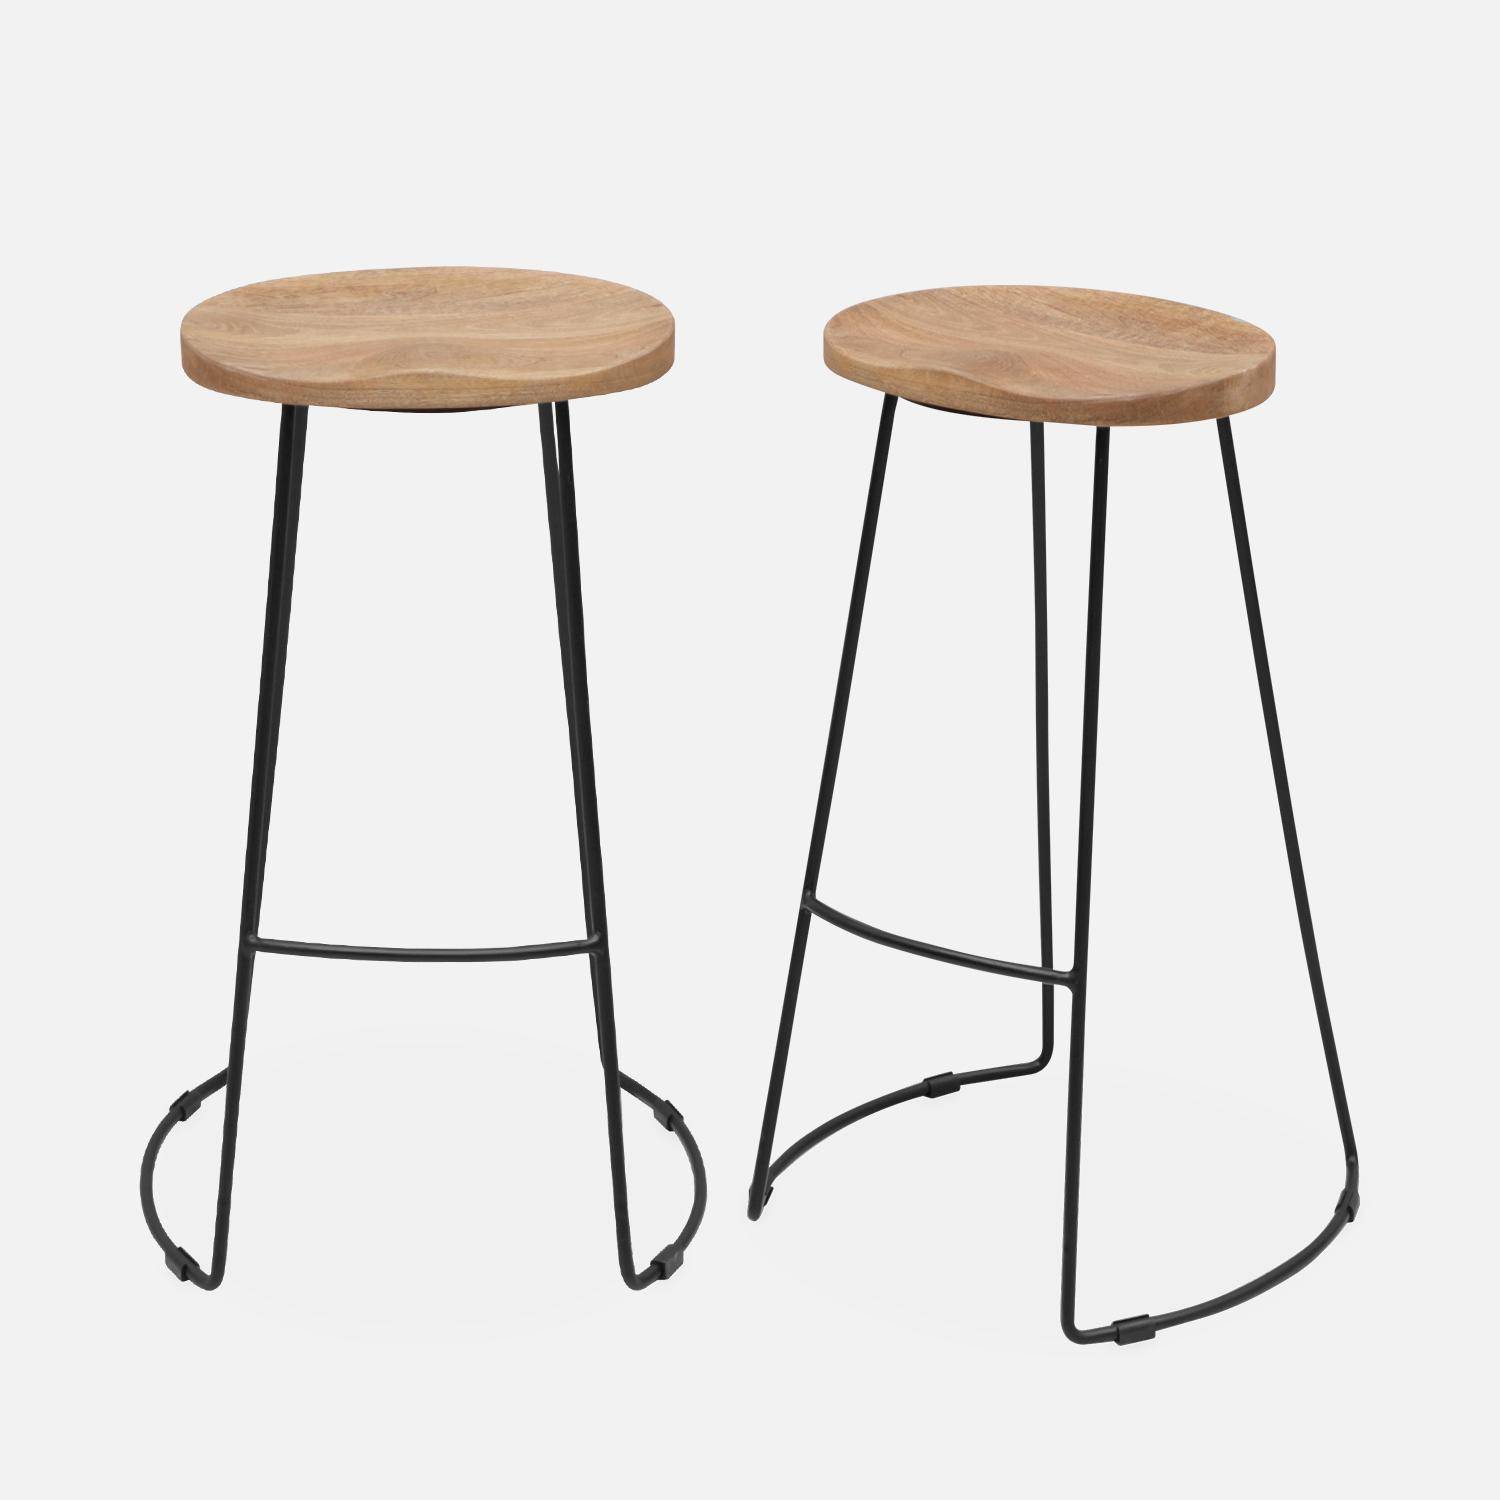 Pair of industrial metal and wooden bar stools, 47x40x75cm, Jaya, Natural, Mango wood seat, black metal legs Photo3